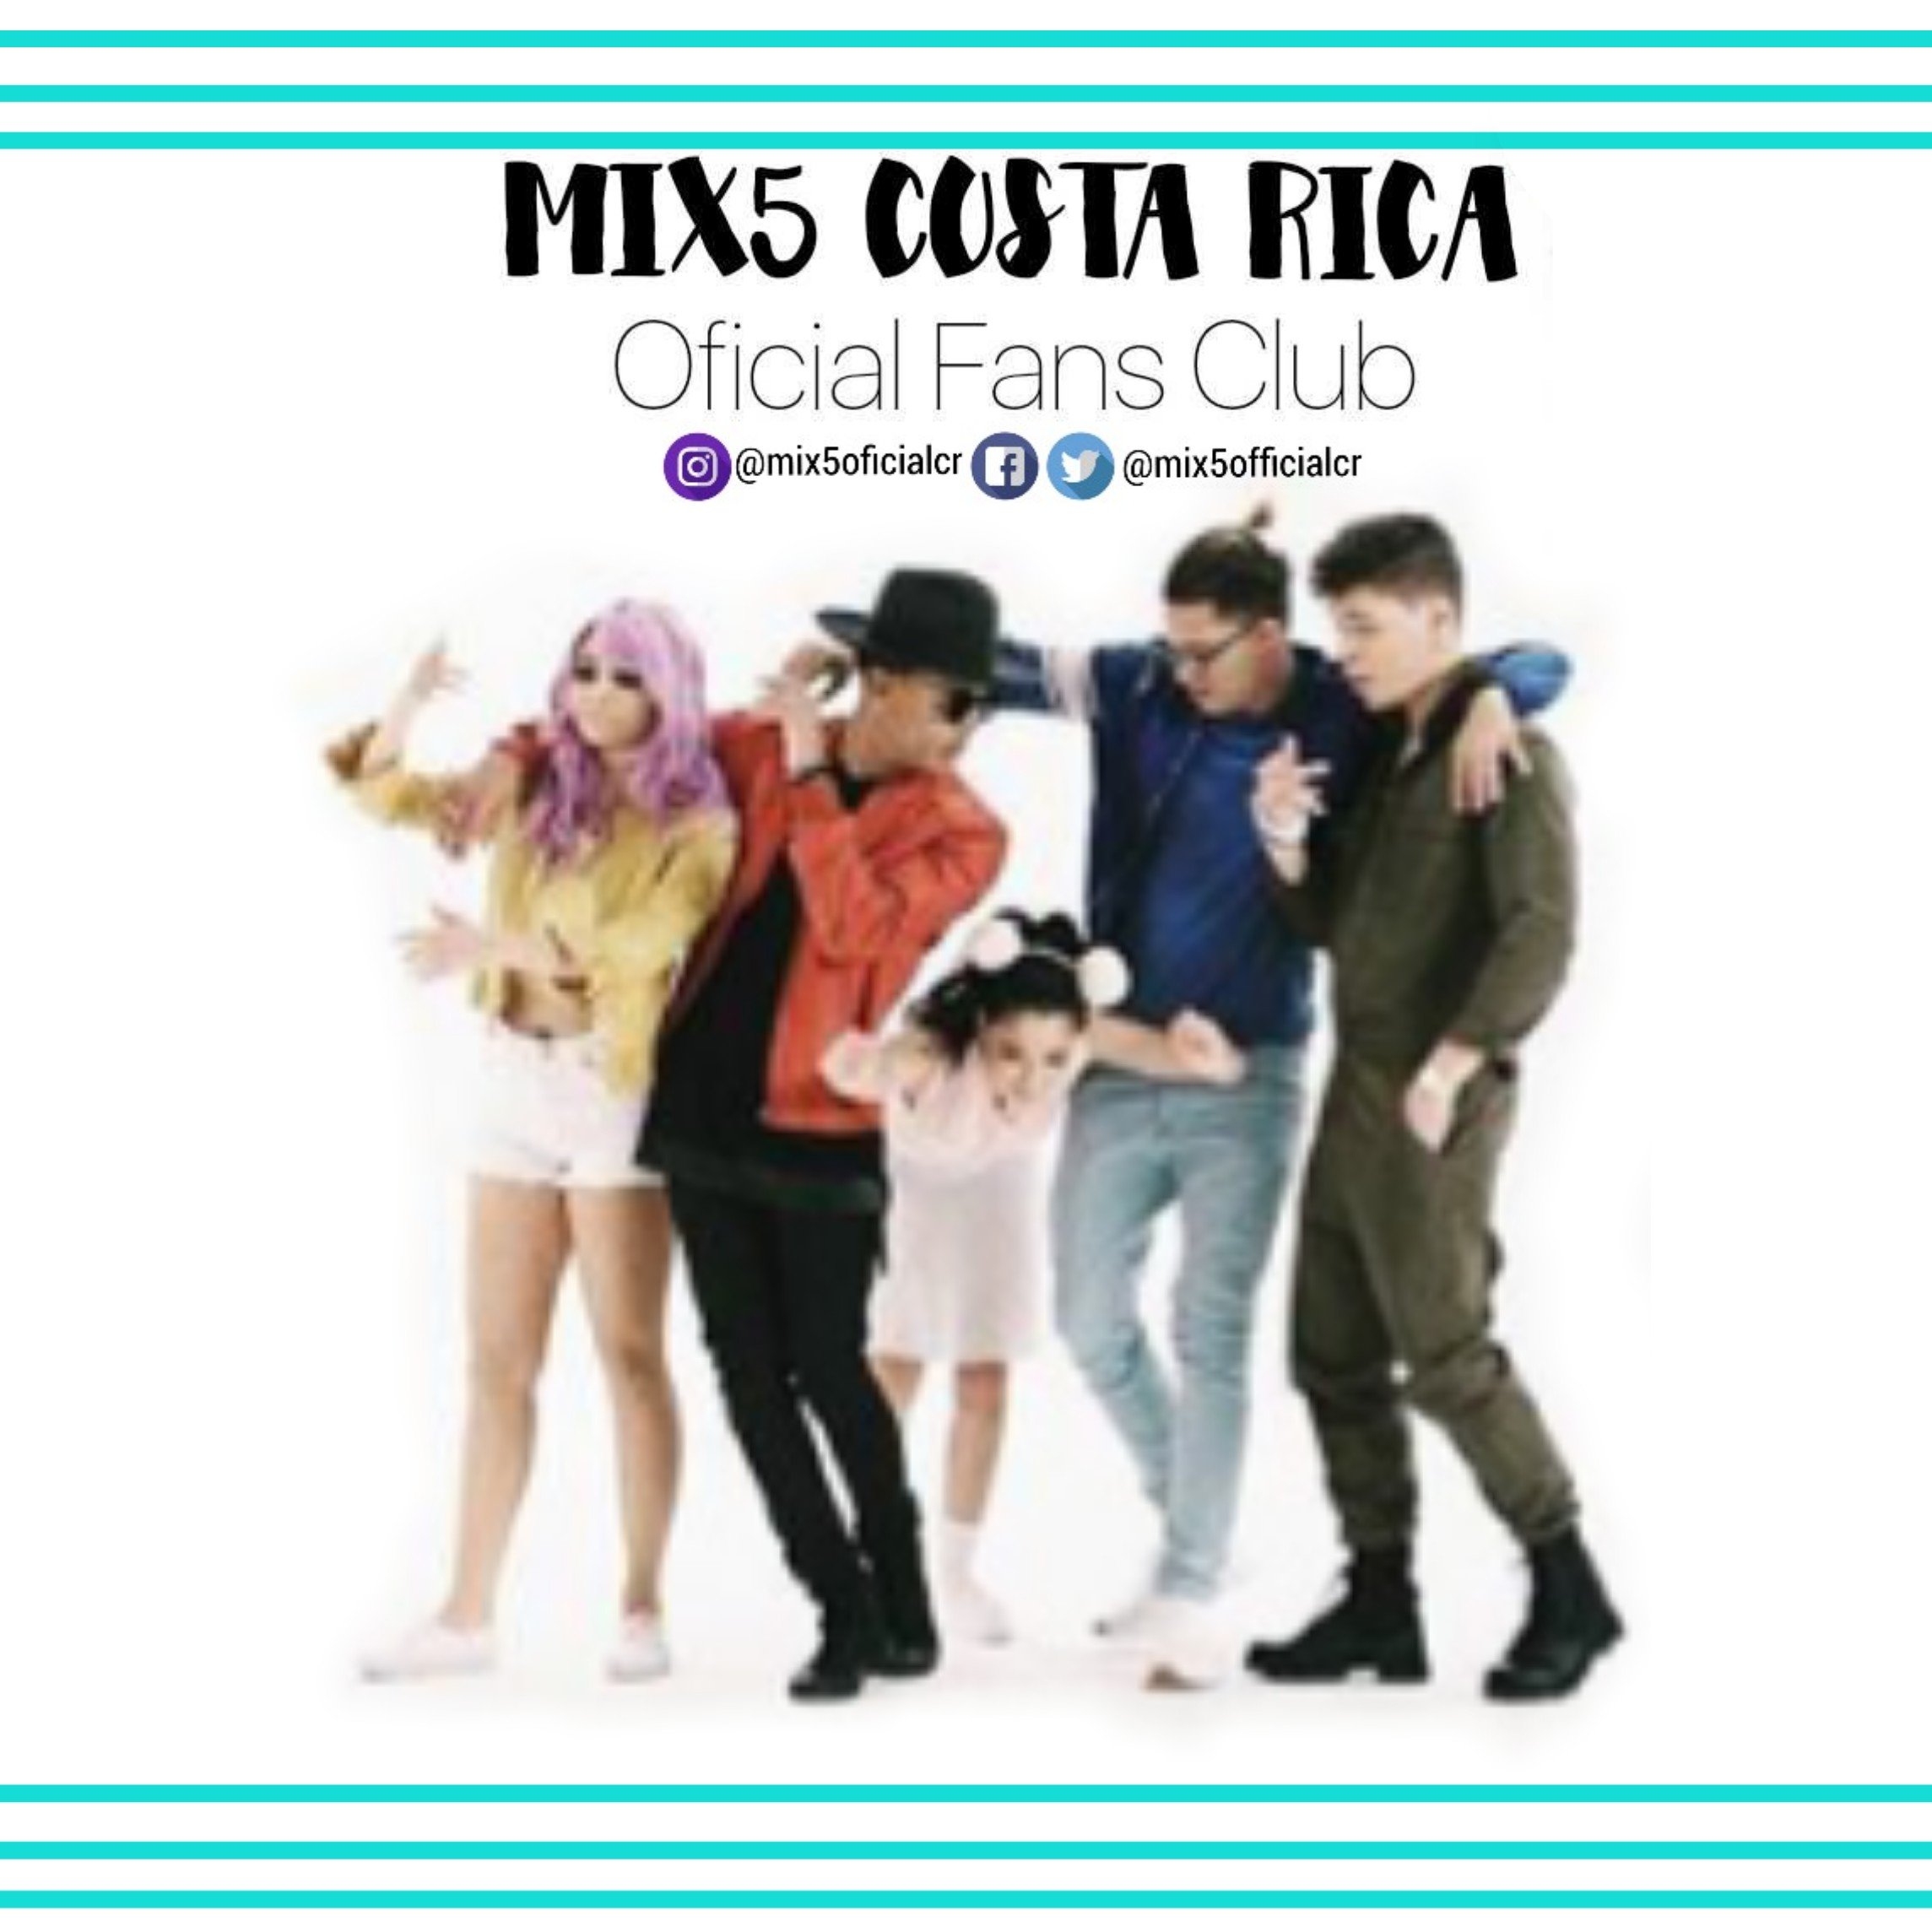 Primer Fans Club Oficial de MIX5 en Costa Rica 🇨🇷 •Danelly. •Taishmara(fta). •Christian. •Brian. •Ario. @mix5official #MIX5CostaRica